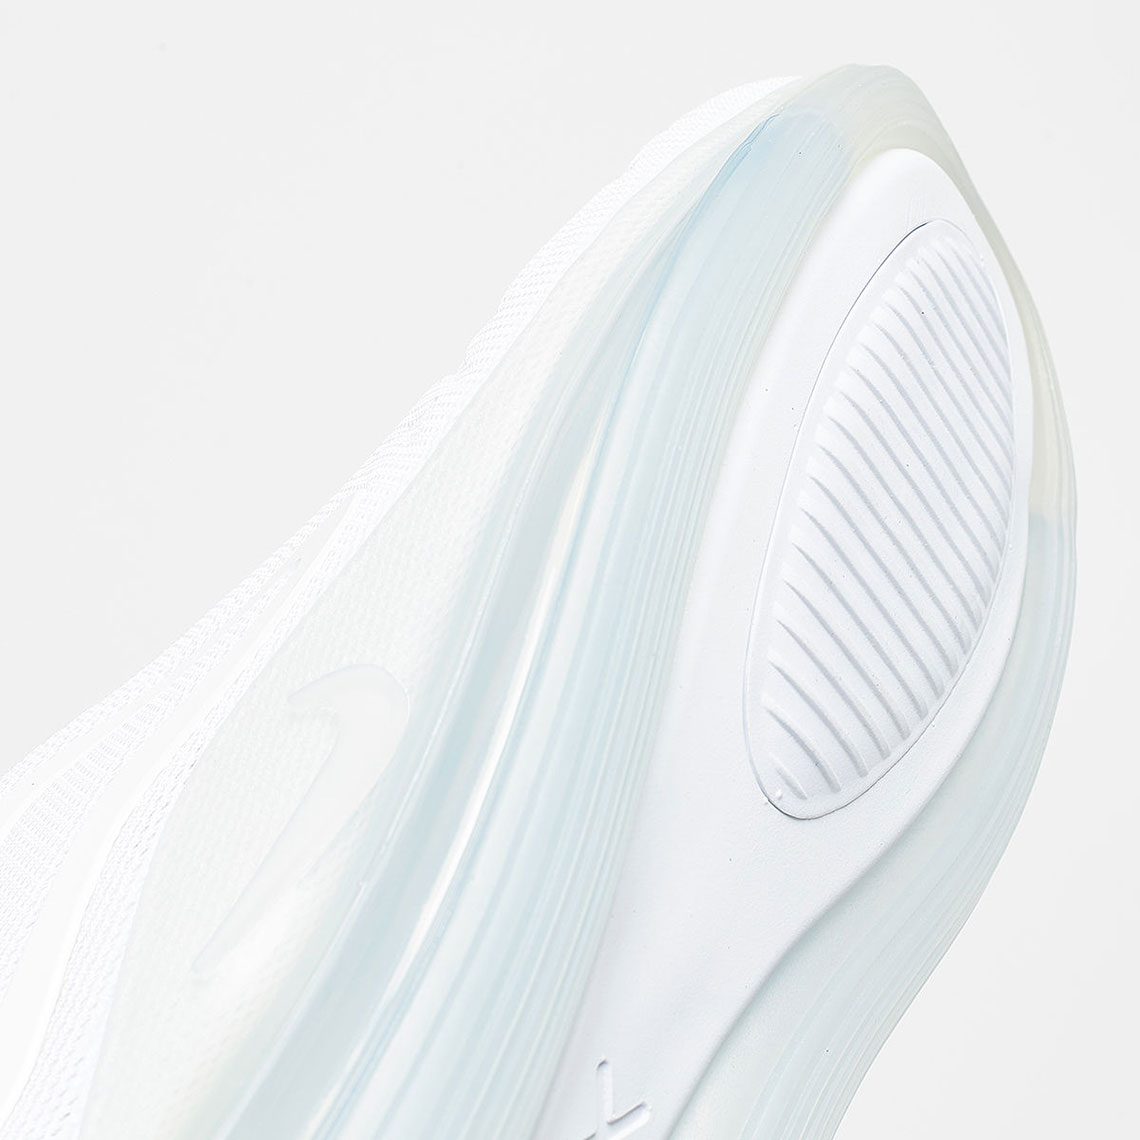 Nike Air Max 720 White/Metallic Platinum - AO2924-100